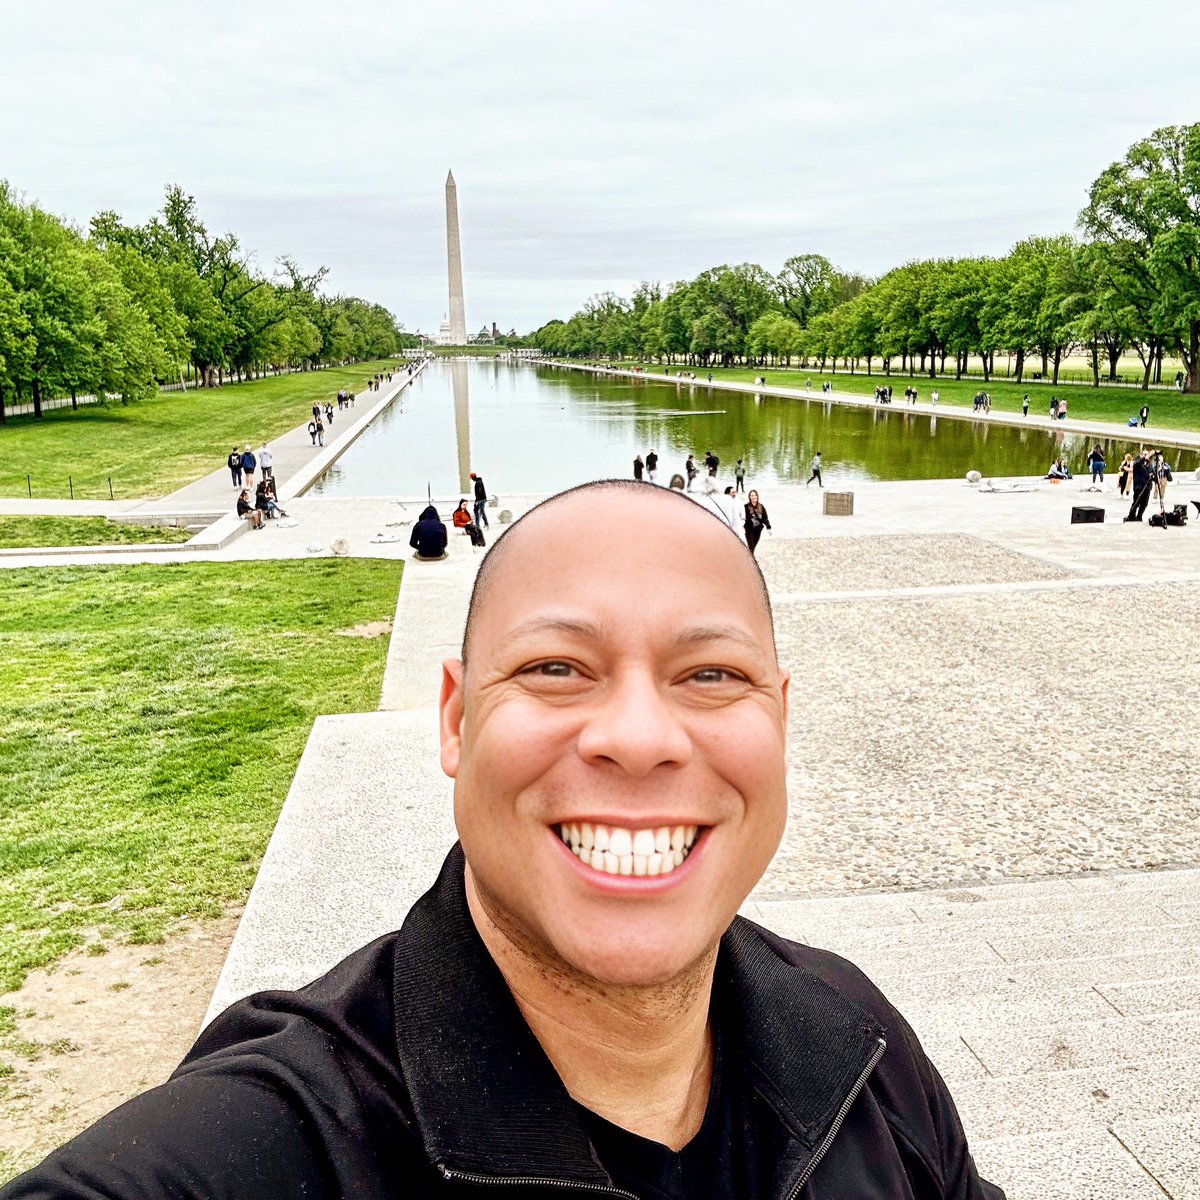 All Smiles At The Capitol…
#explore #travel #smile #happiness #monuments #travelblogger #skymileslife #travelphotography #georgewashington #nationalmall #washingtondc